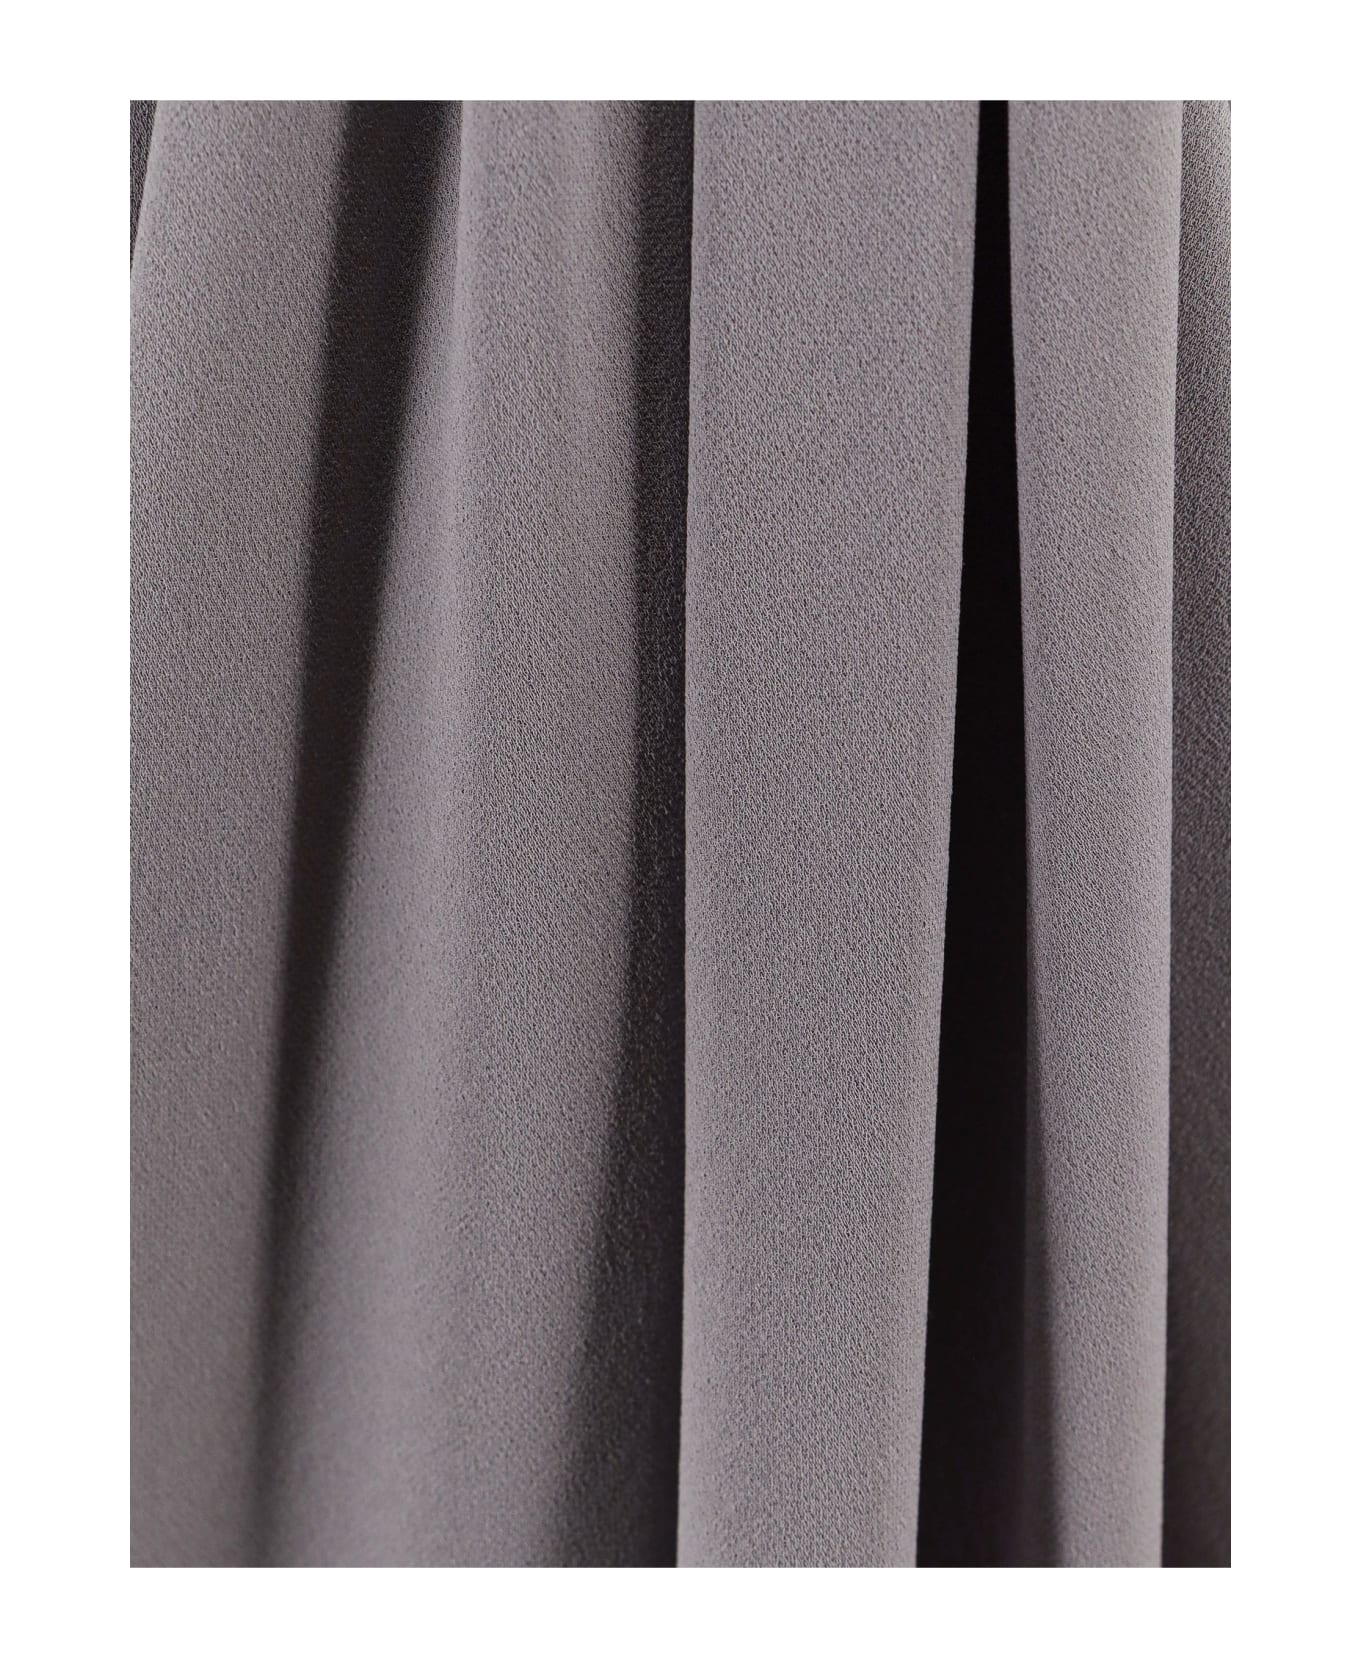 Giorgio Armani Dress - Grey